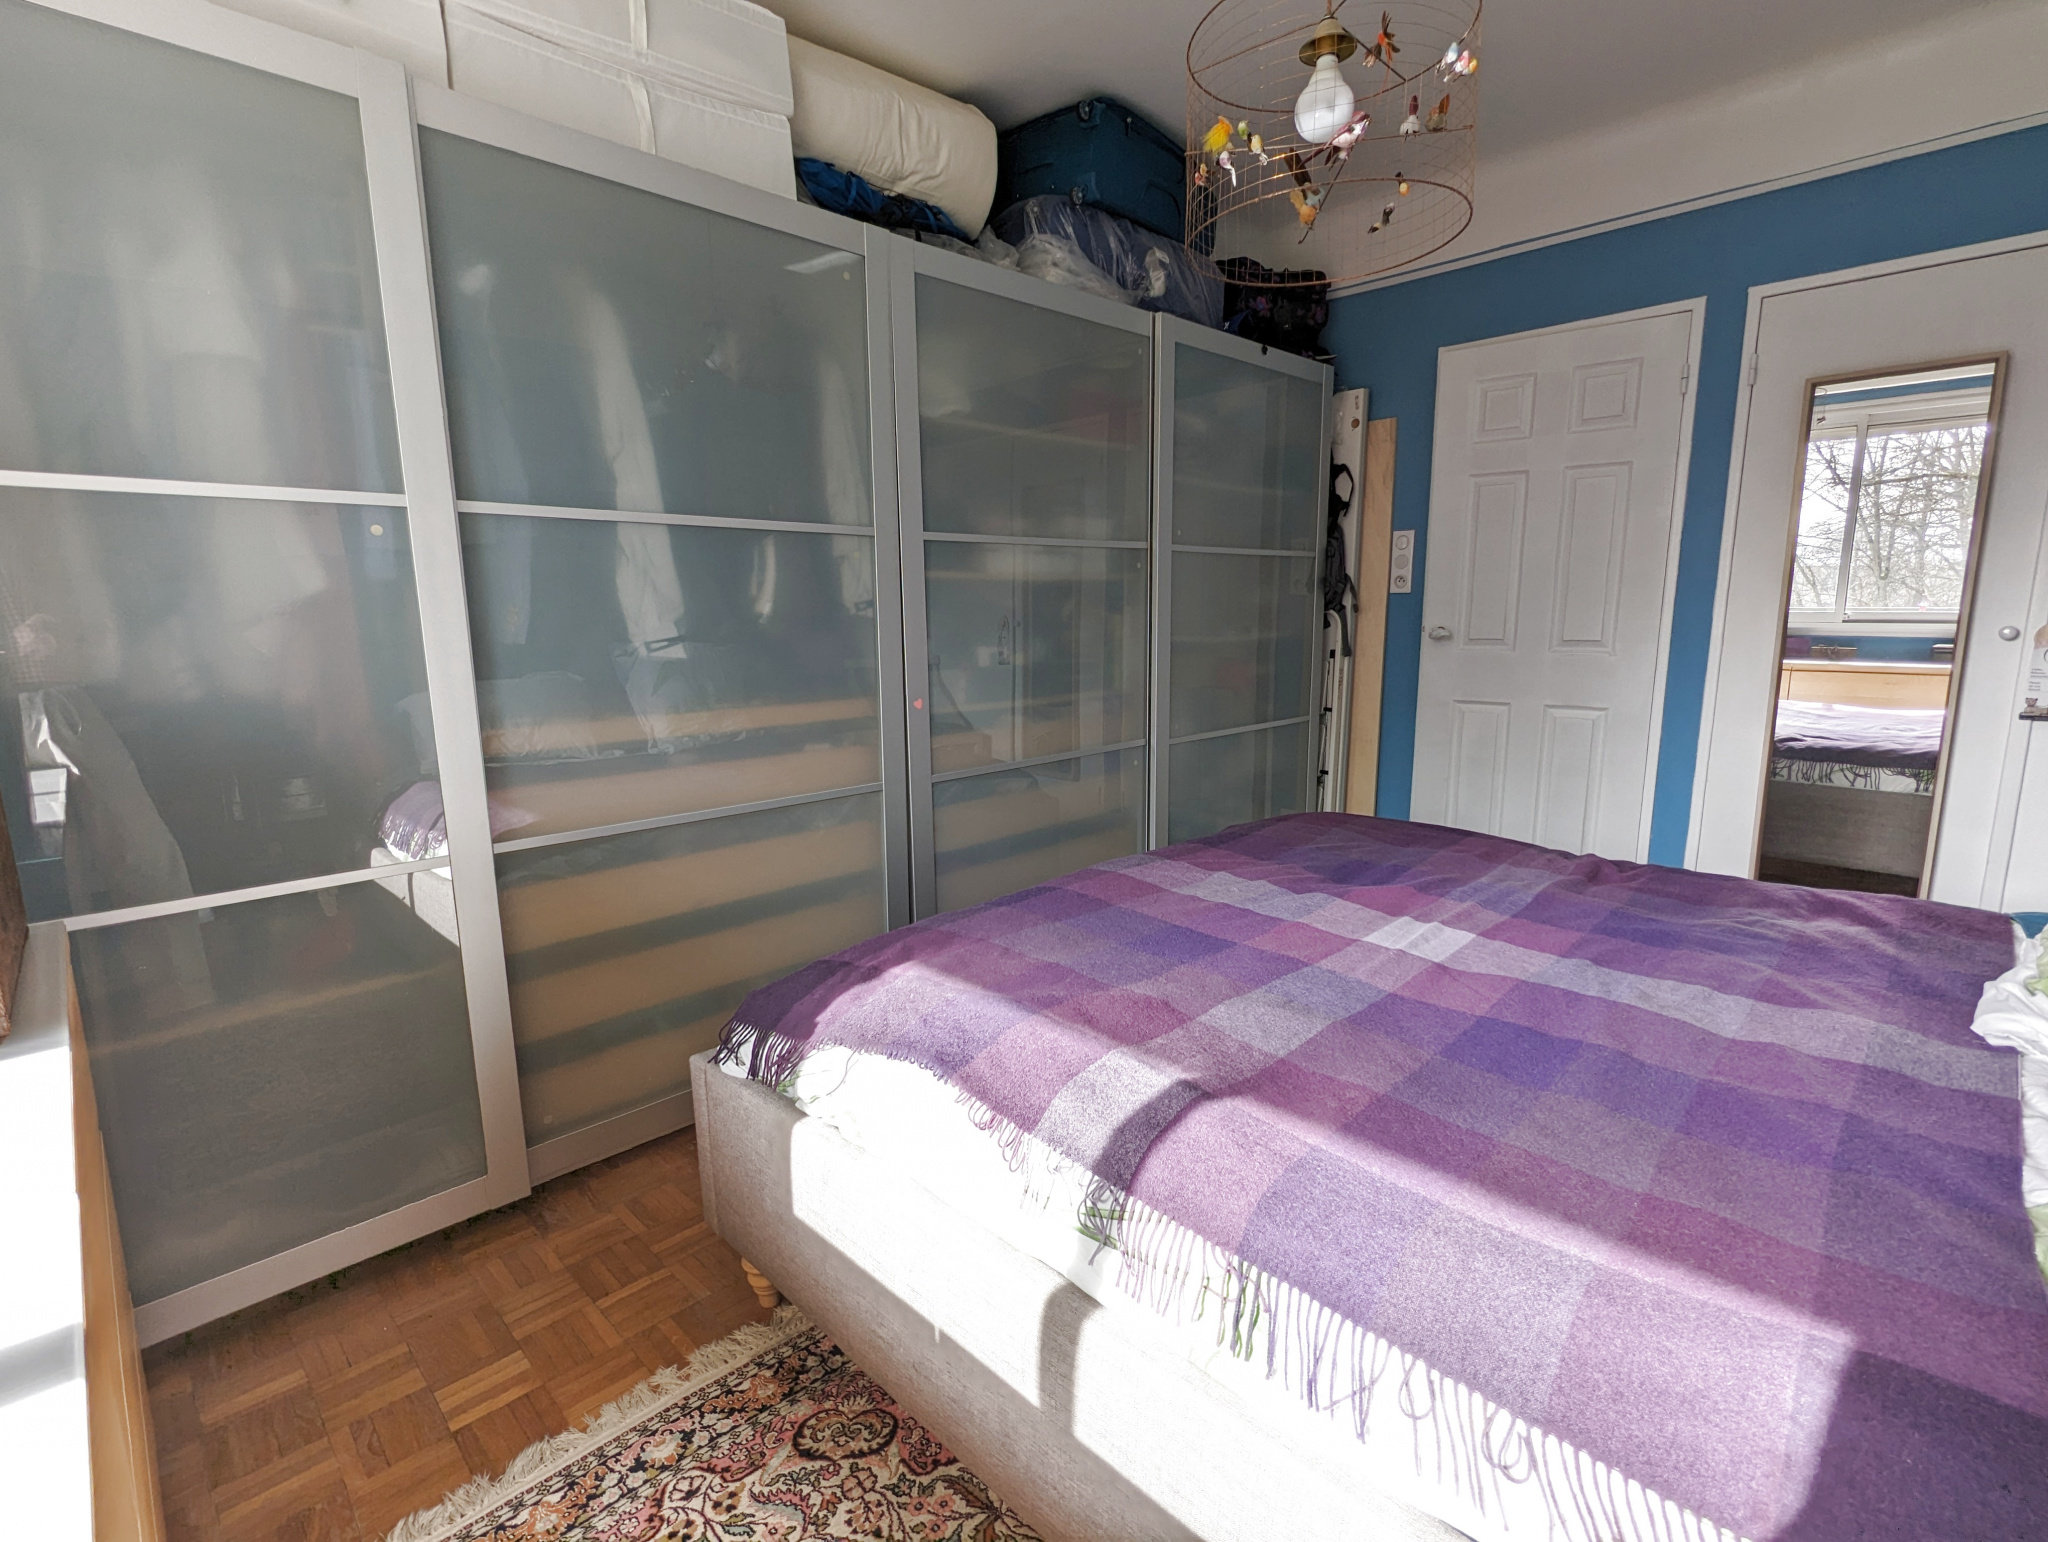 Appartement a louer ville-d'avray - 4 pièce(s) - 82 m2 - Surfyn